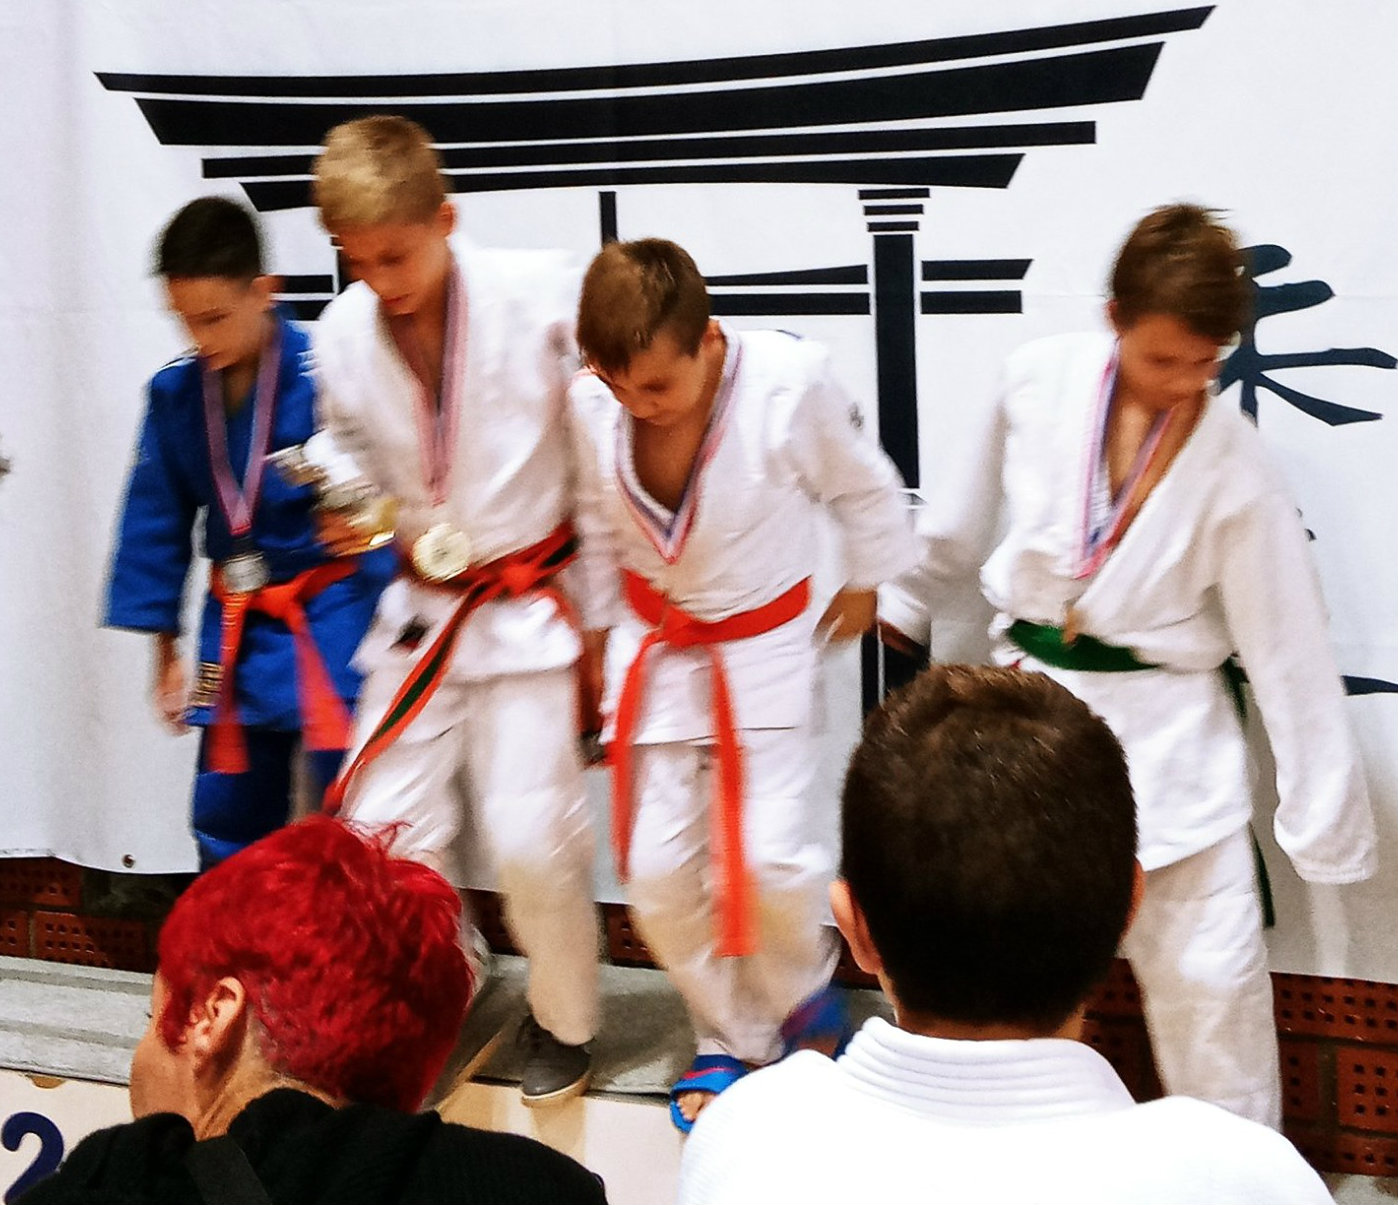 judoist judo kluba bela krajina, Kristjan Kočevar, osvoji 3. mesto